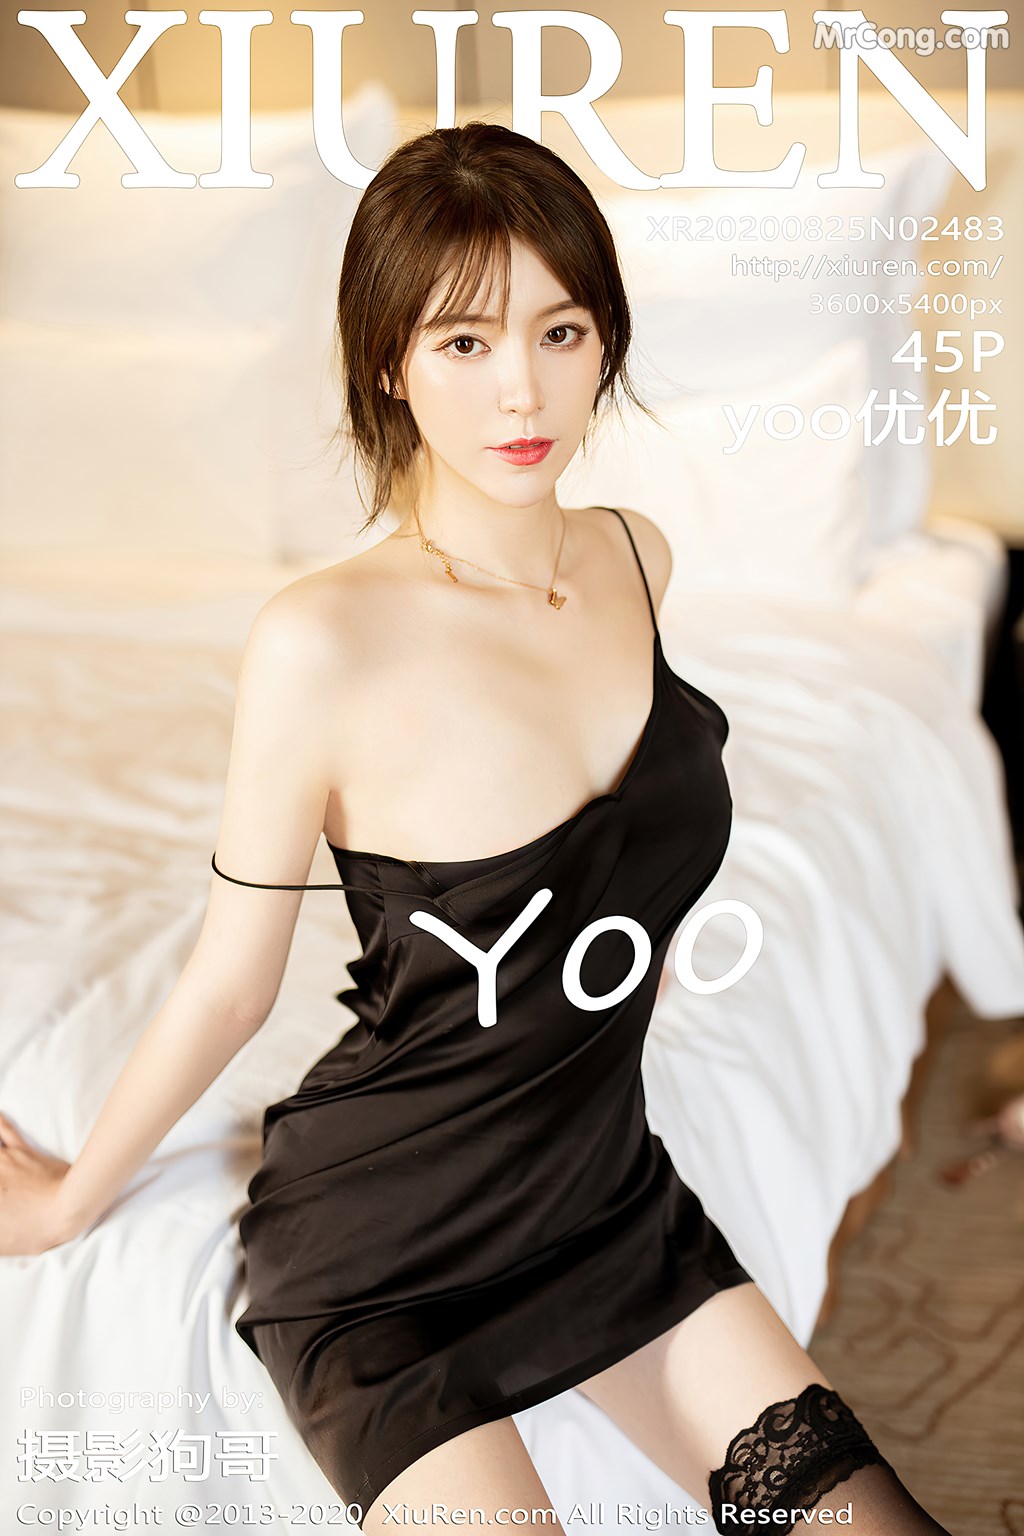 [XIUREN] No.2483 yoo优优 Cover Photo